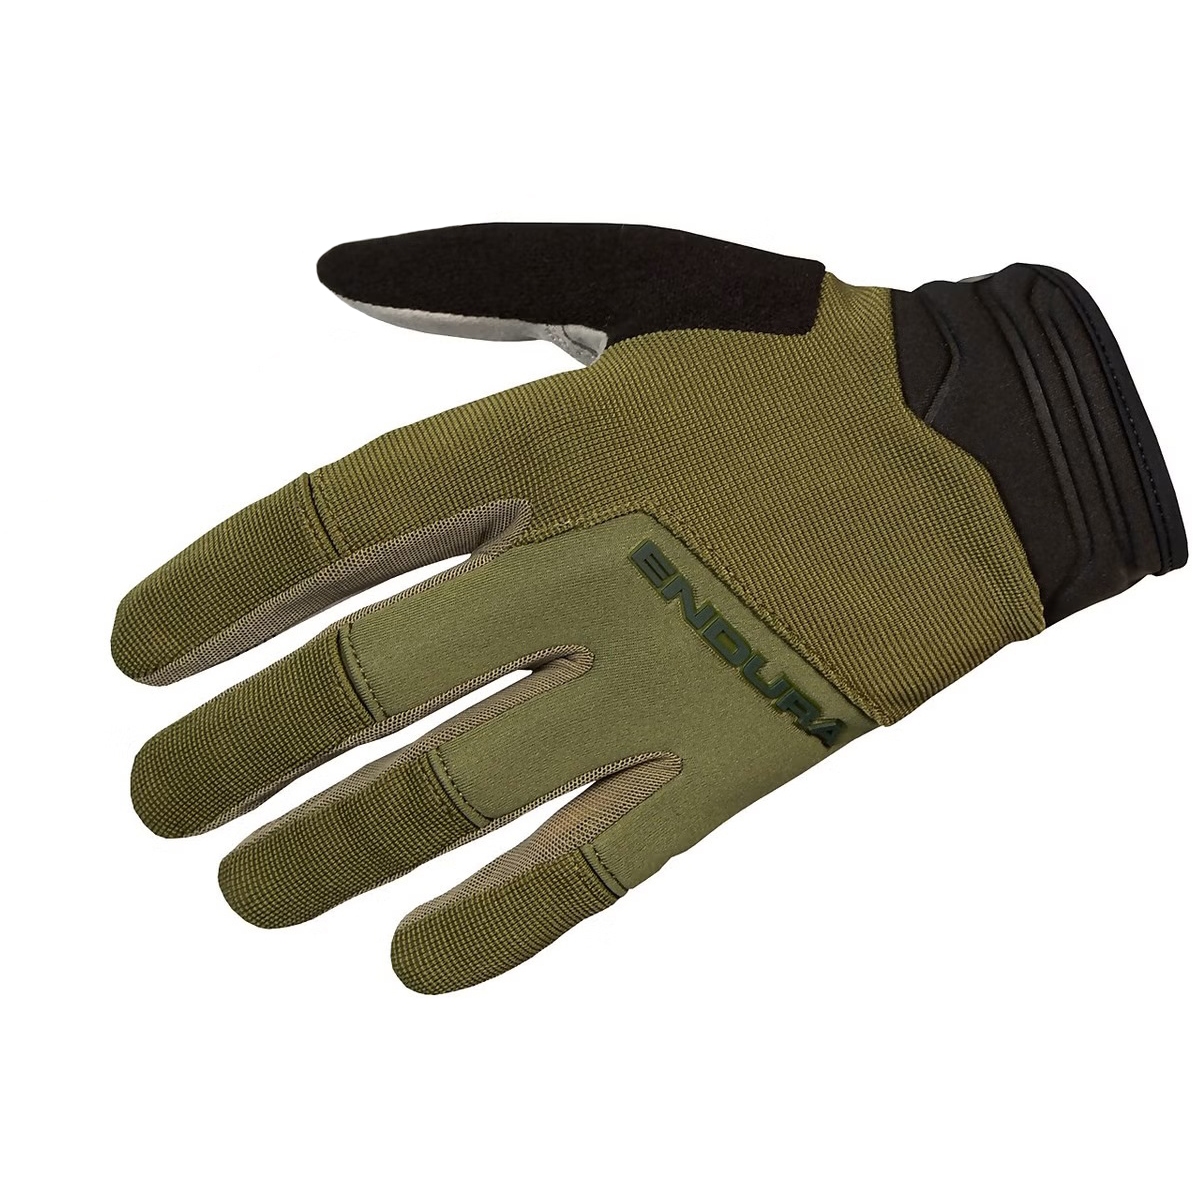 Bild von Endura Hummvee Plus II Vollfinger-Handschuhe - olivgrün